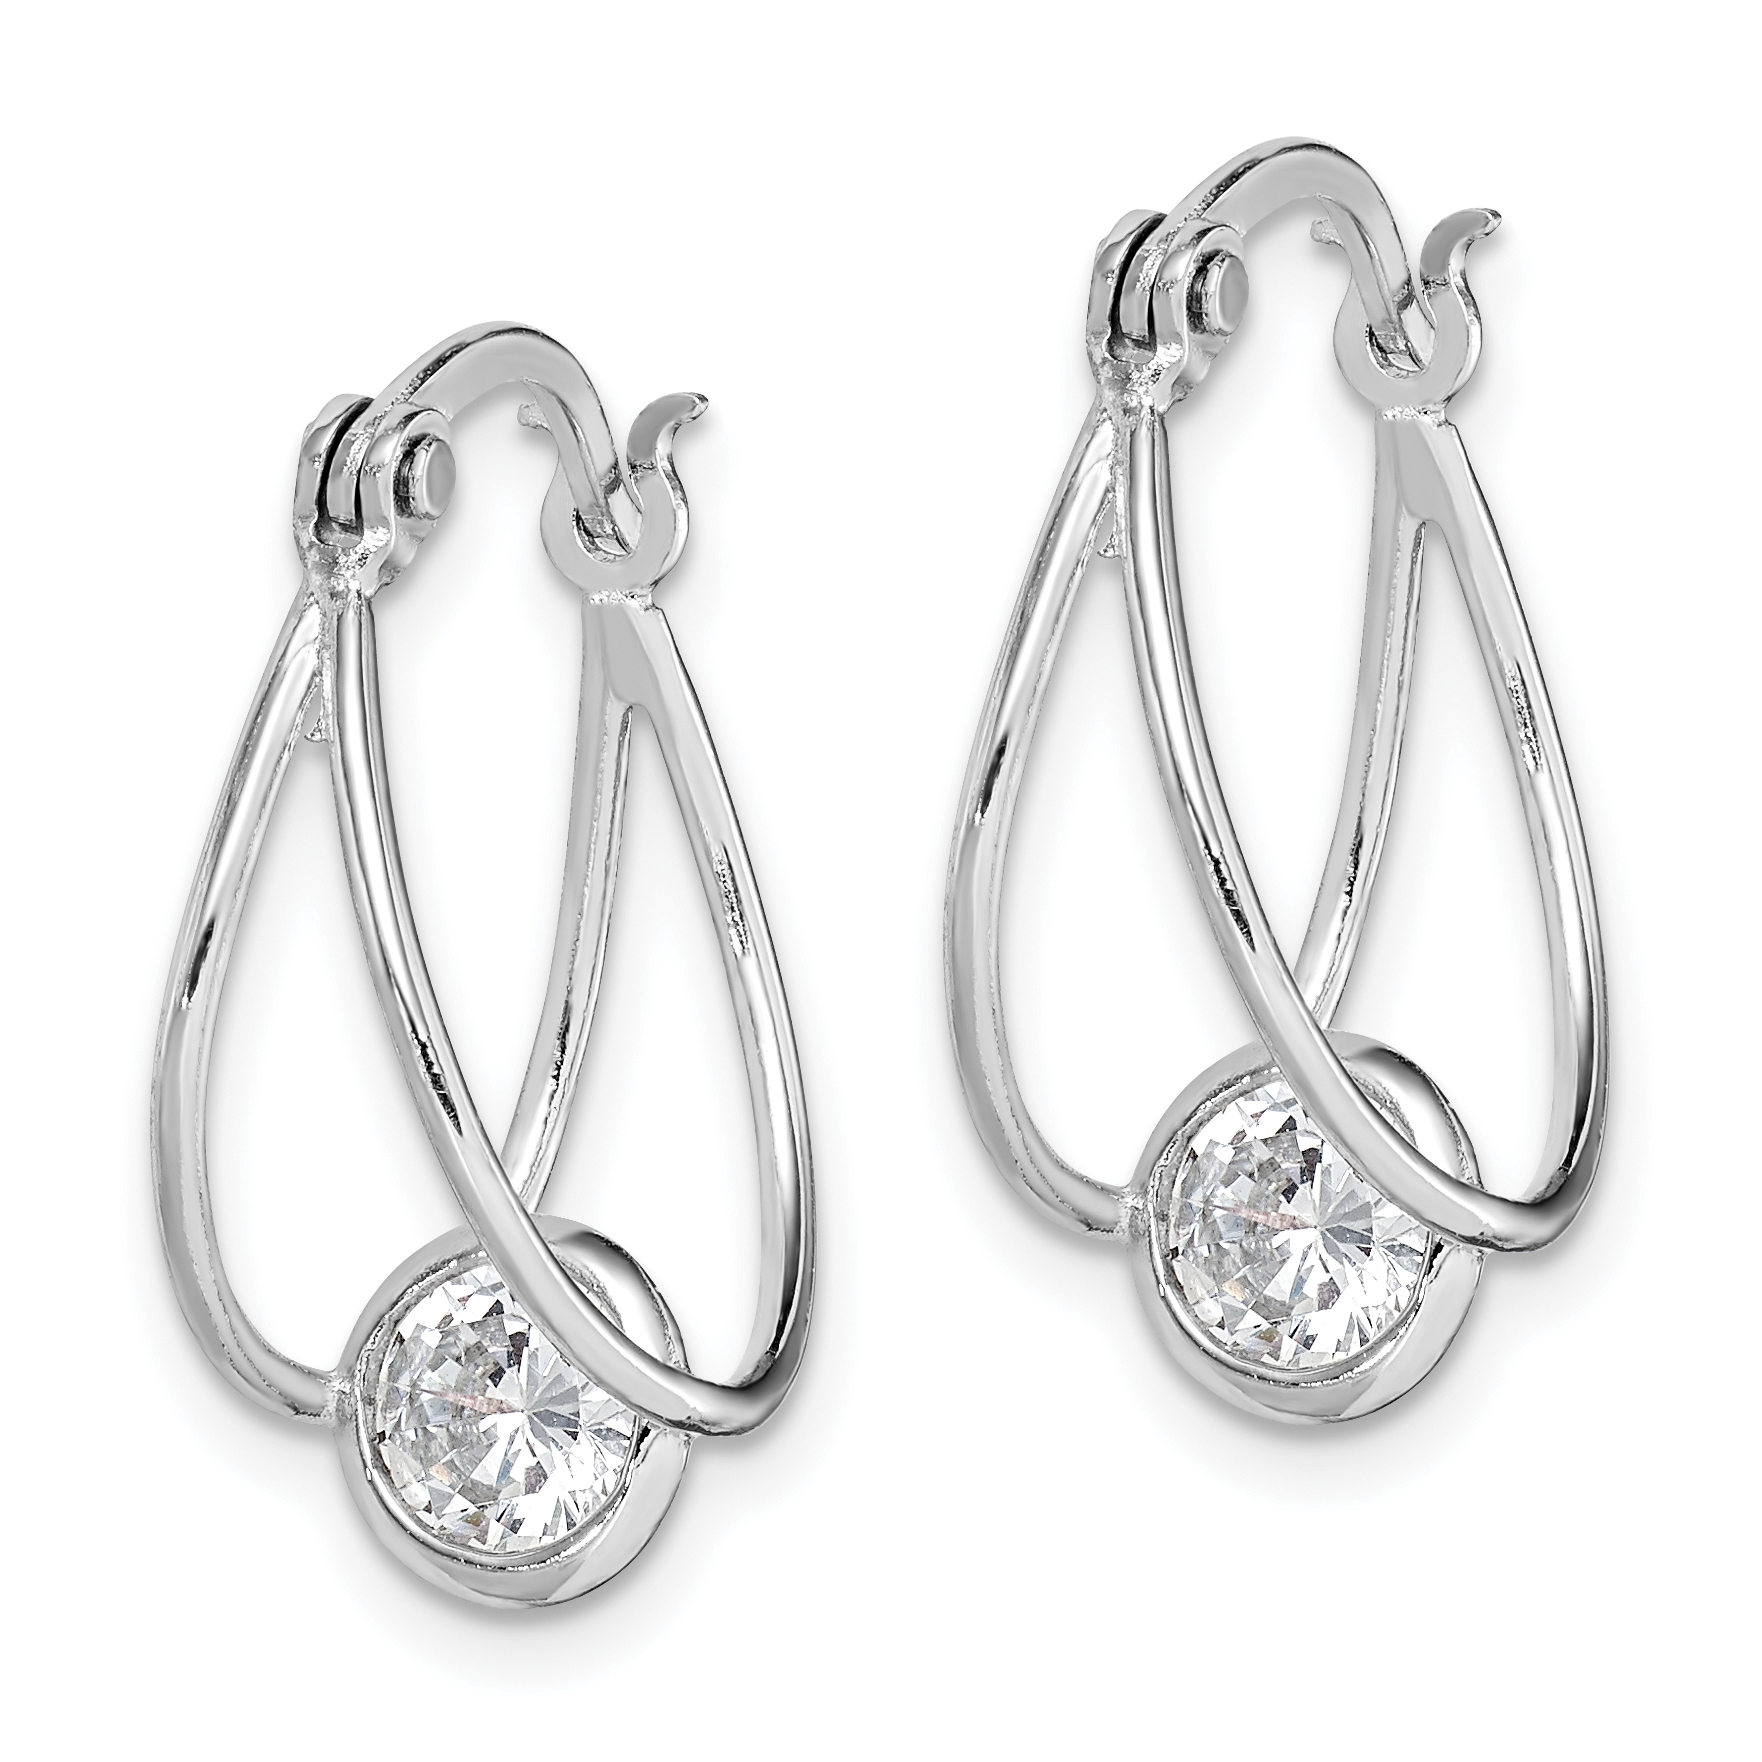 Primal Silver Sterling Silver Rhodium-plated Cubic Zirconia Double Hoop Earrings - image 2 of 5